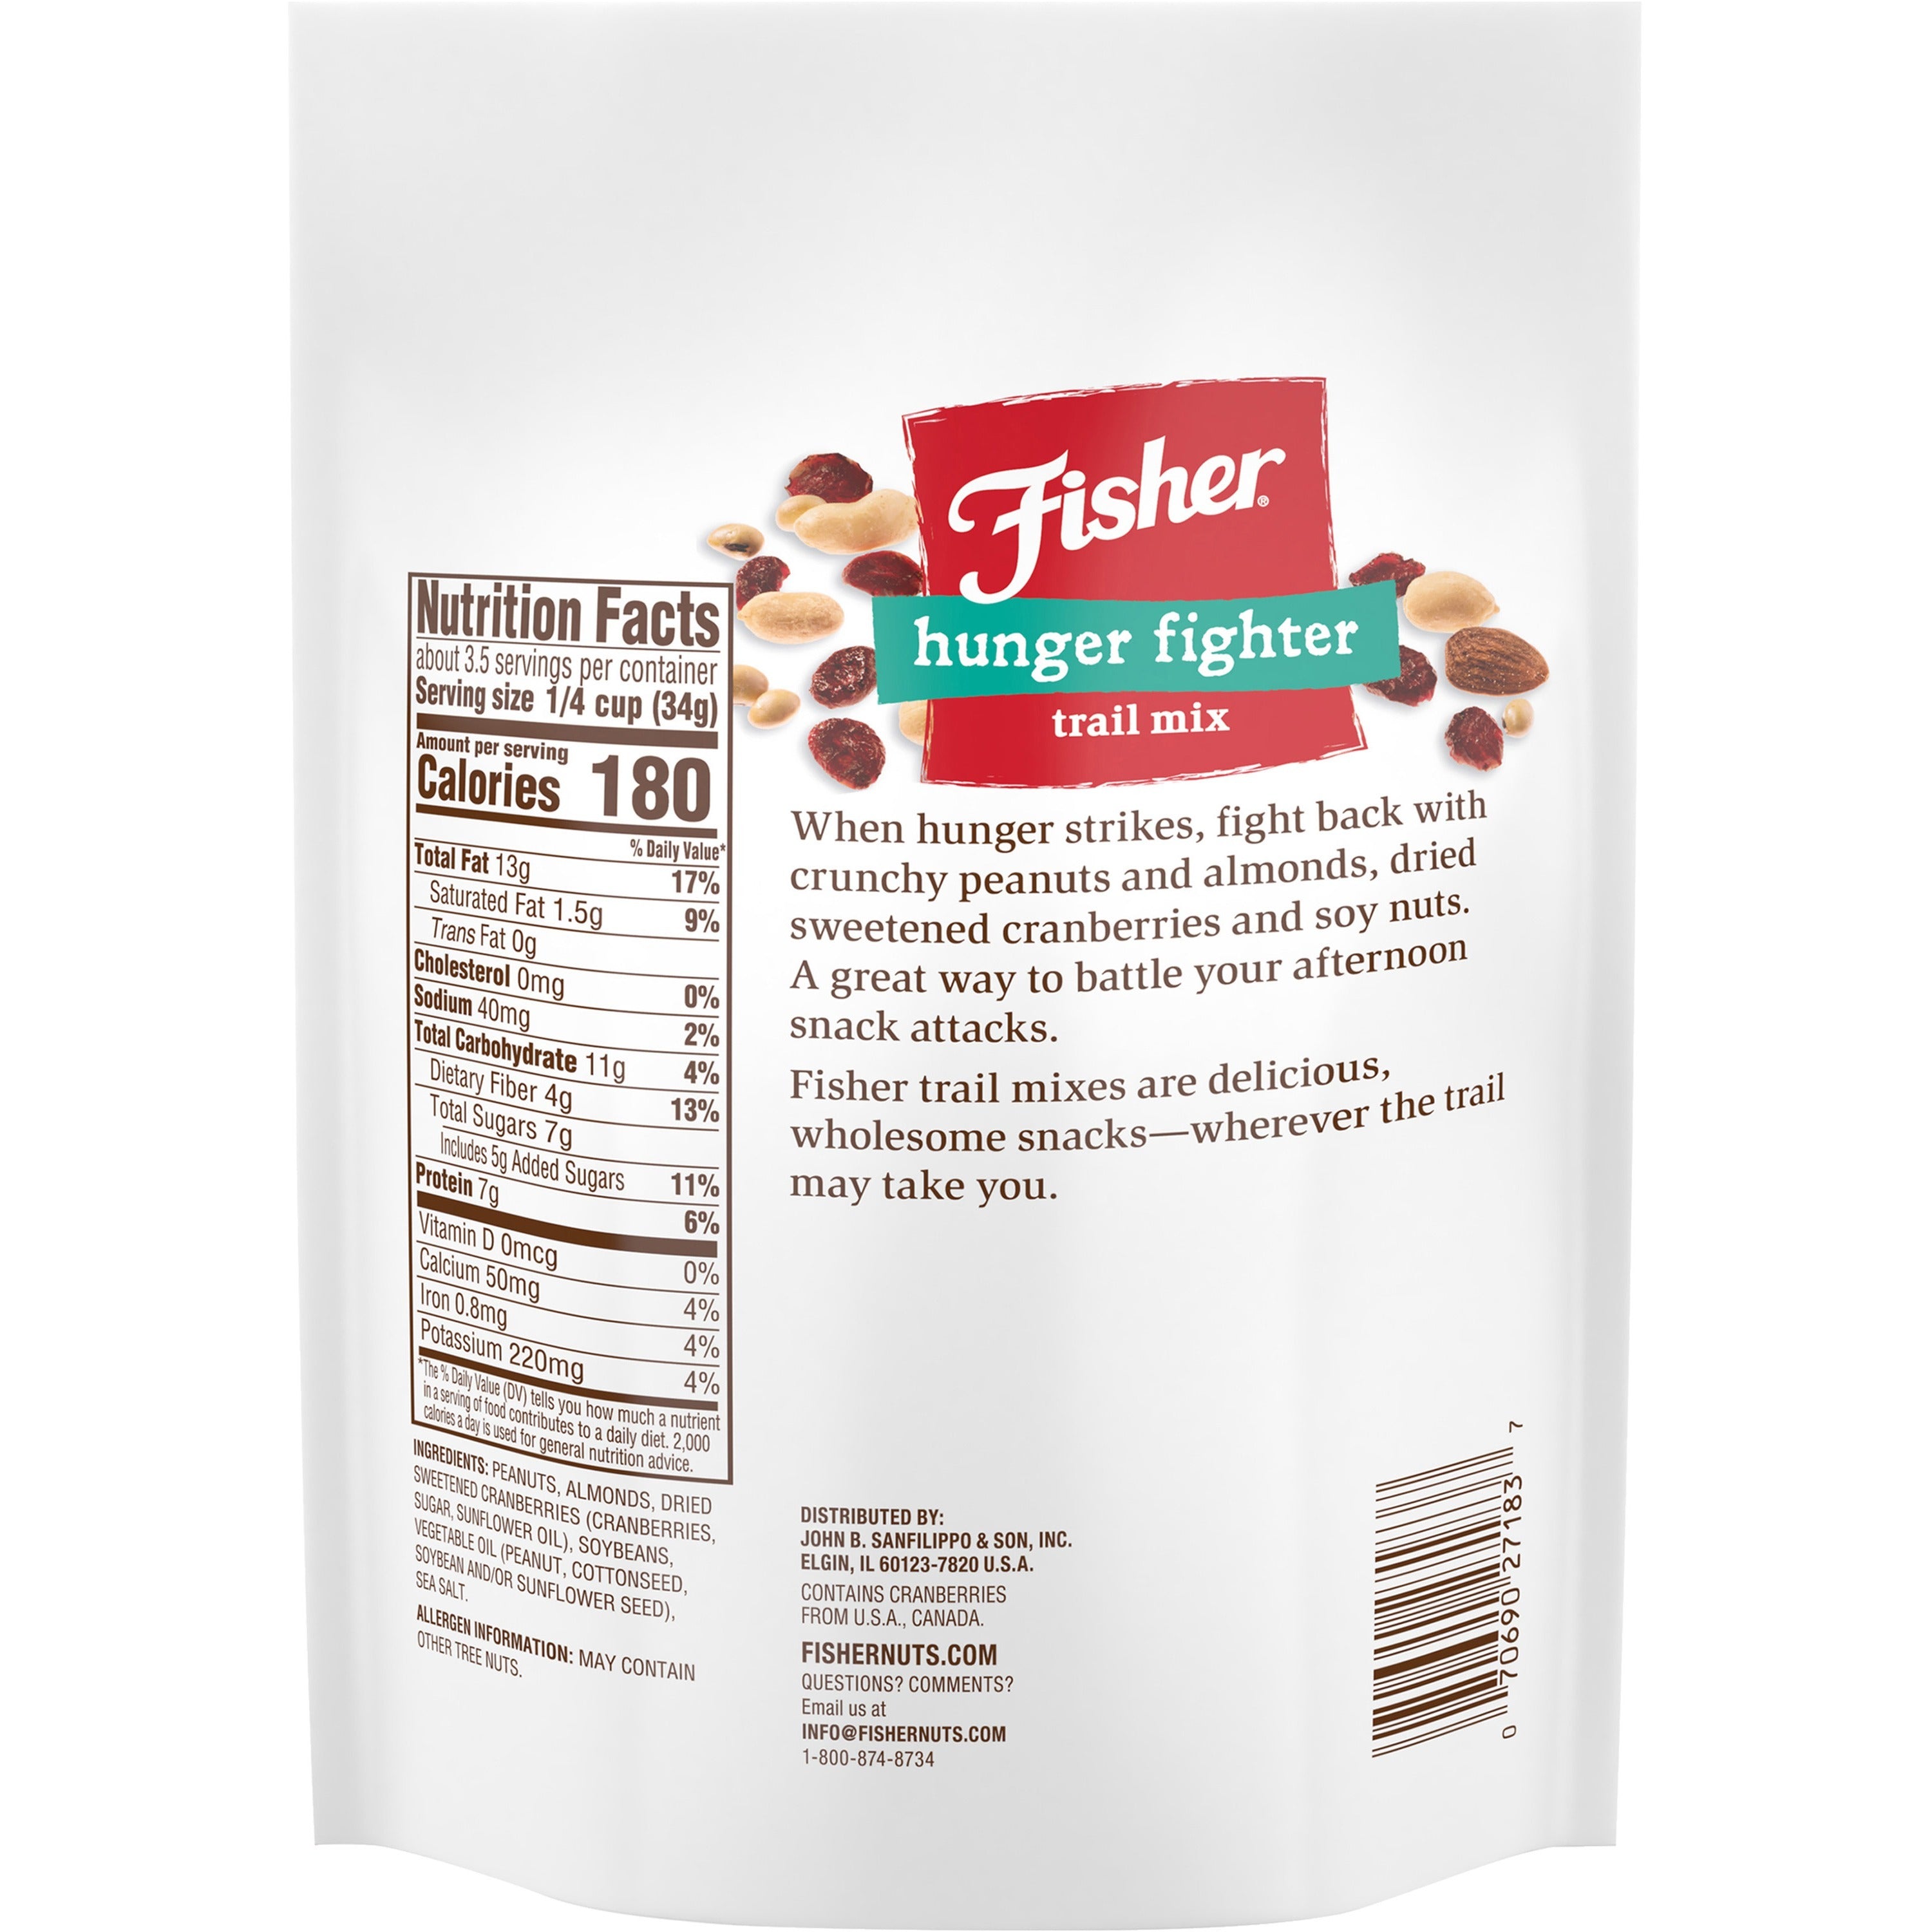 fisher-hunger-fighter-trail-mix-trans-fat-free-peanut-almond-dried-cranberries-1-serving-bag-4-oz-6-carton_jbsp27183 - 2